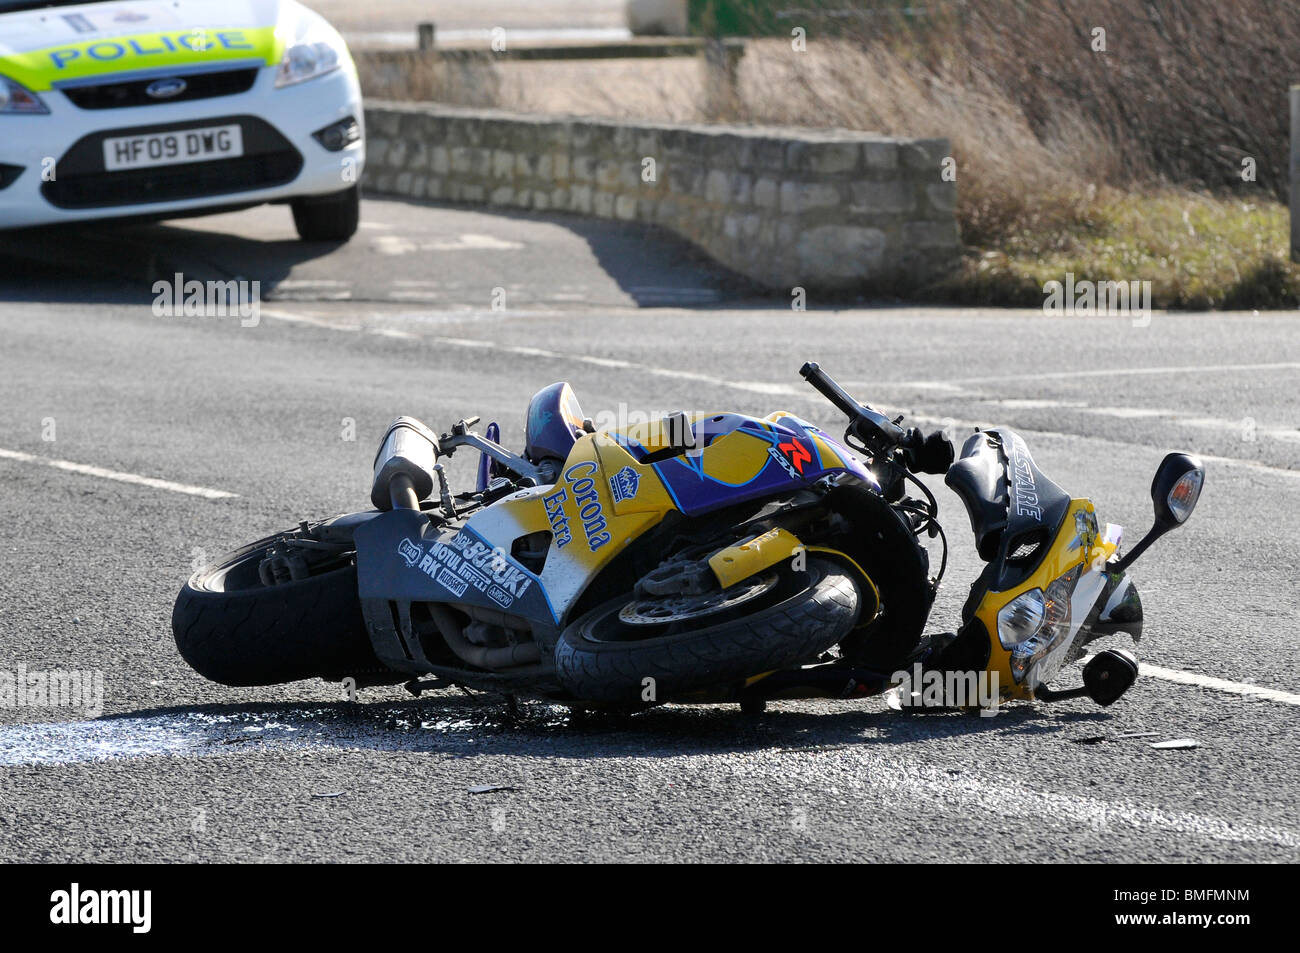 Motociclo crash, moto rta Foto Stock